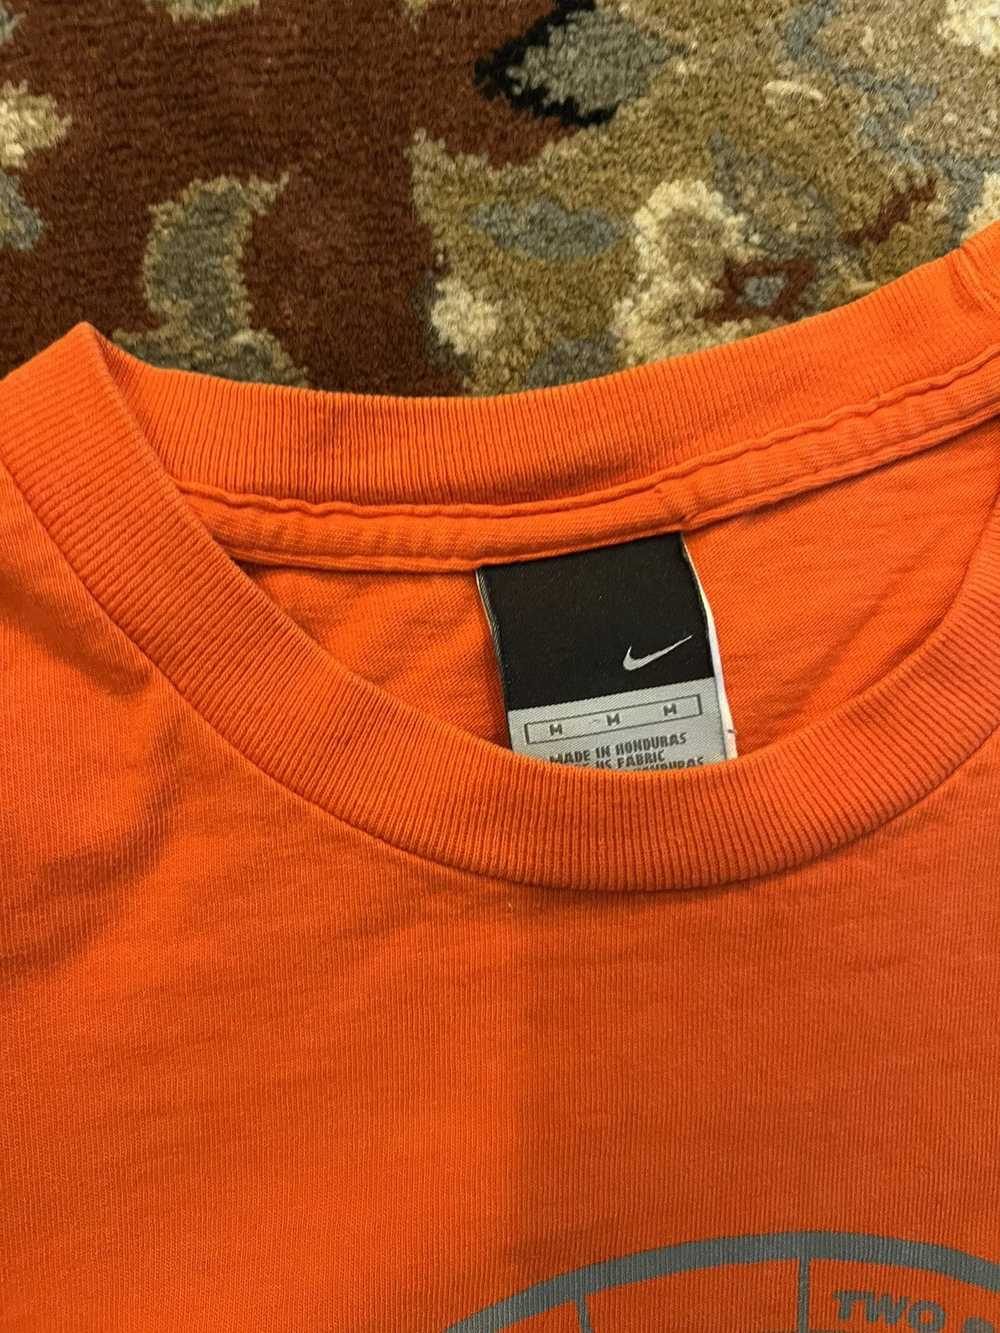 Nike Orange Nike Basketball T-Shirt - image 3